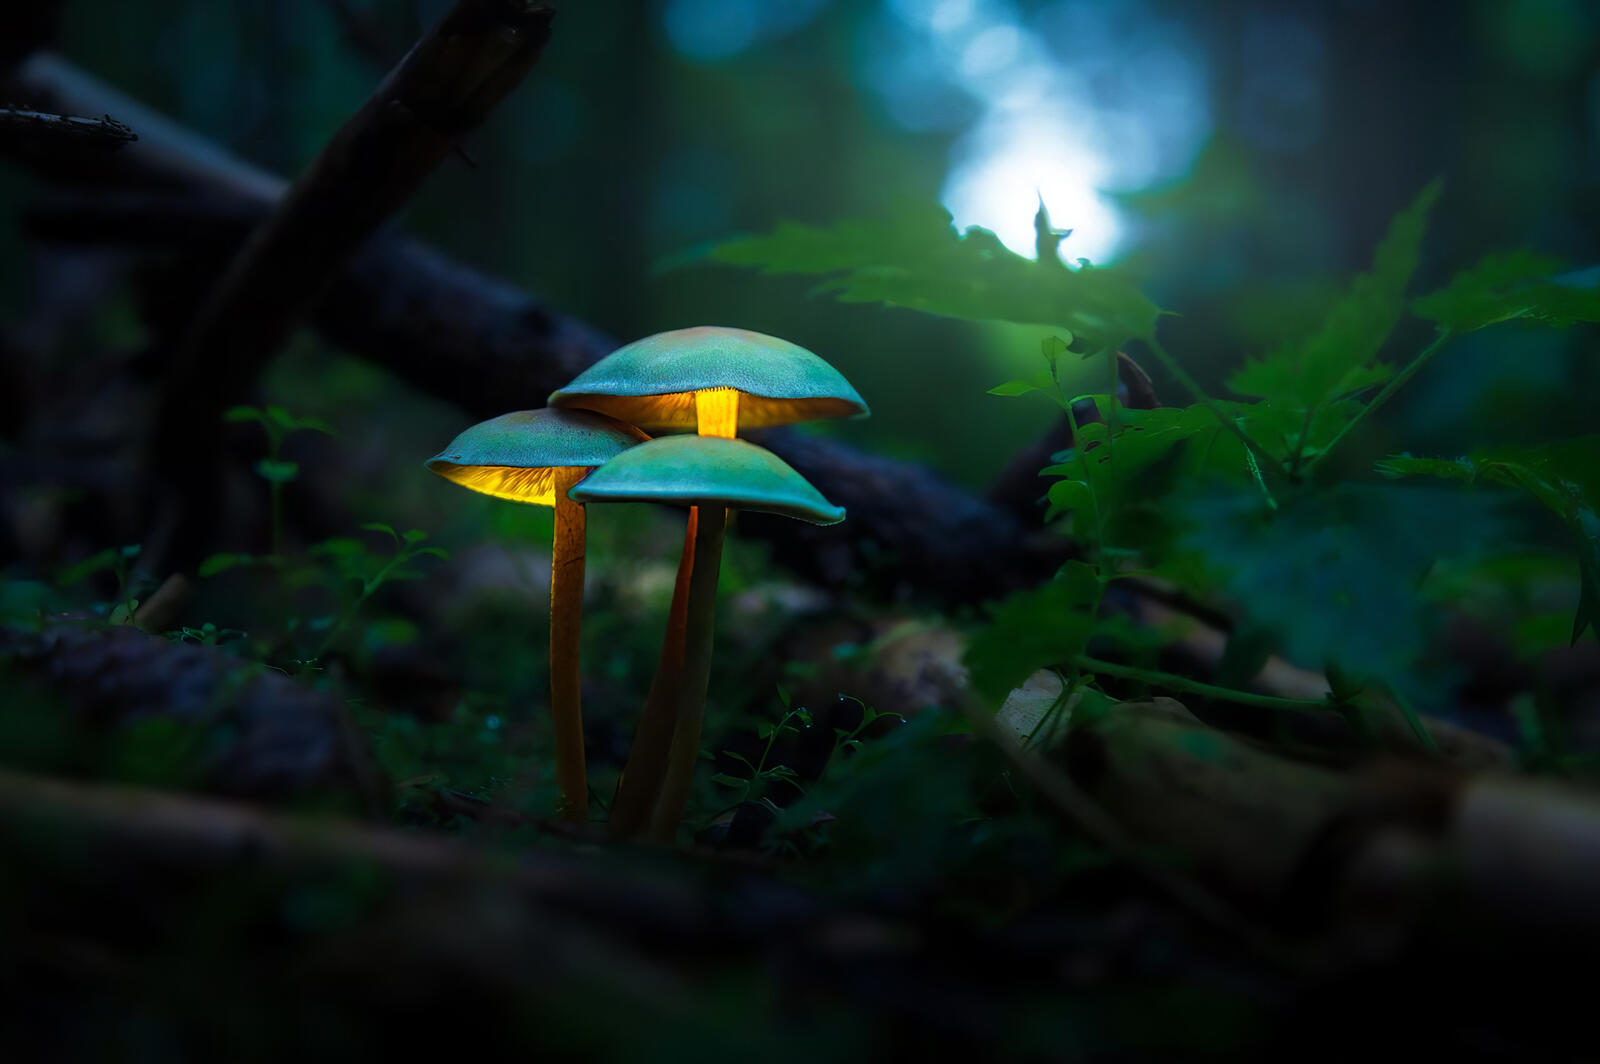 Wallpapers mushroom forest deviant art on the desktop